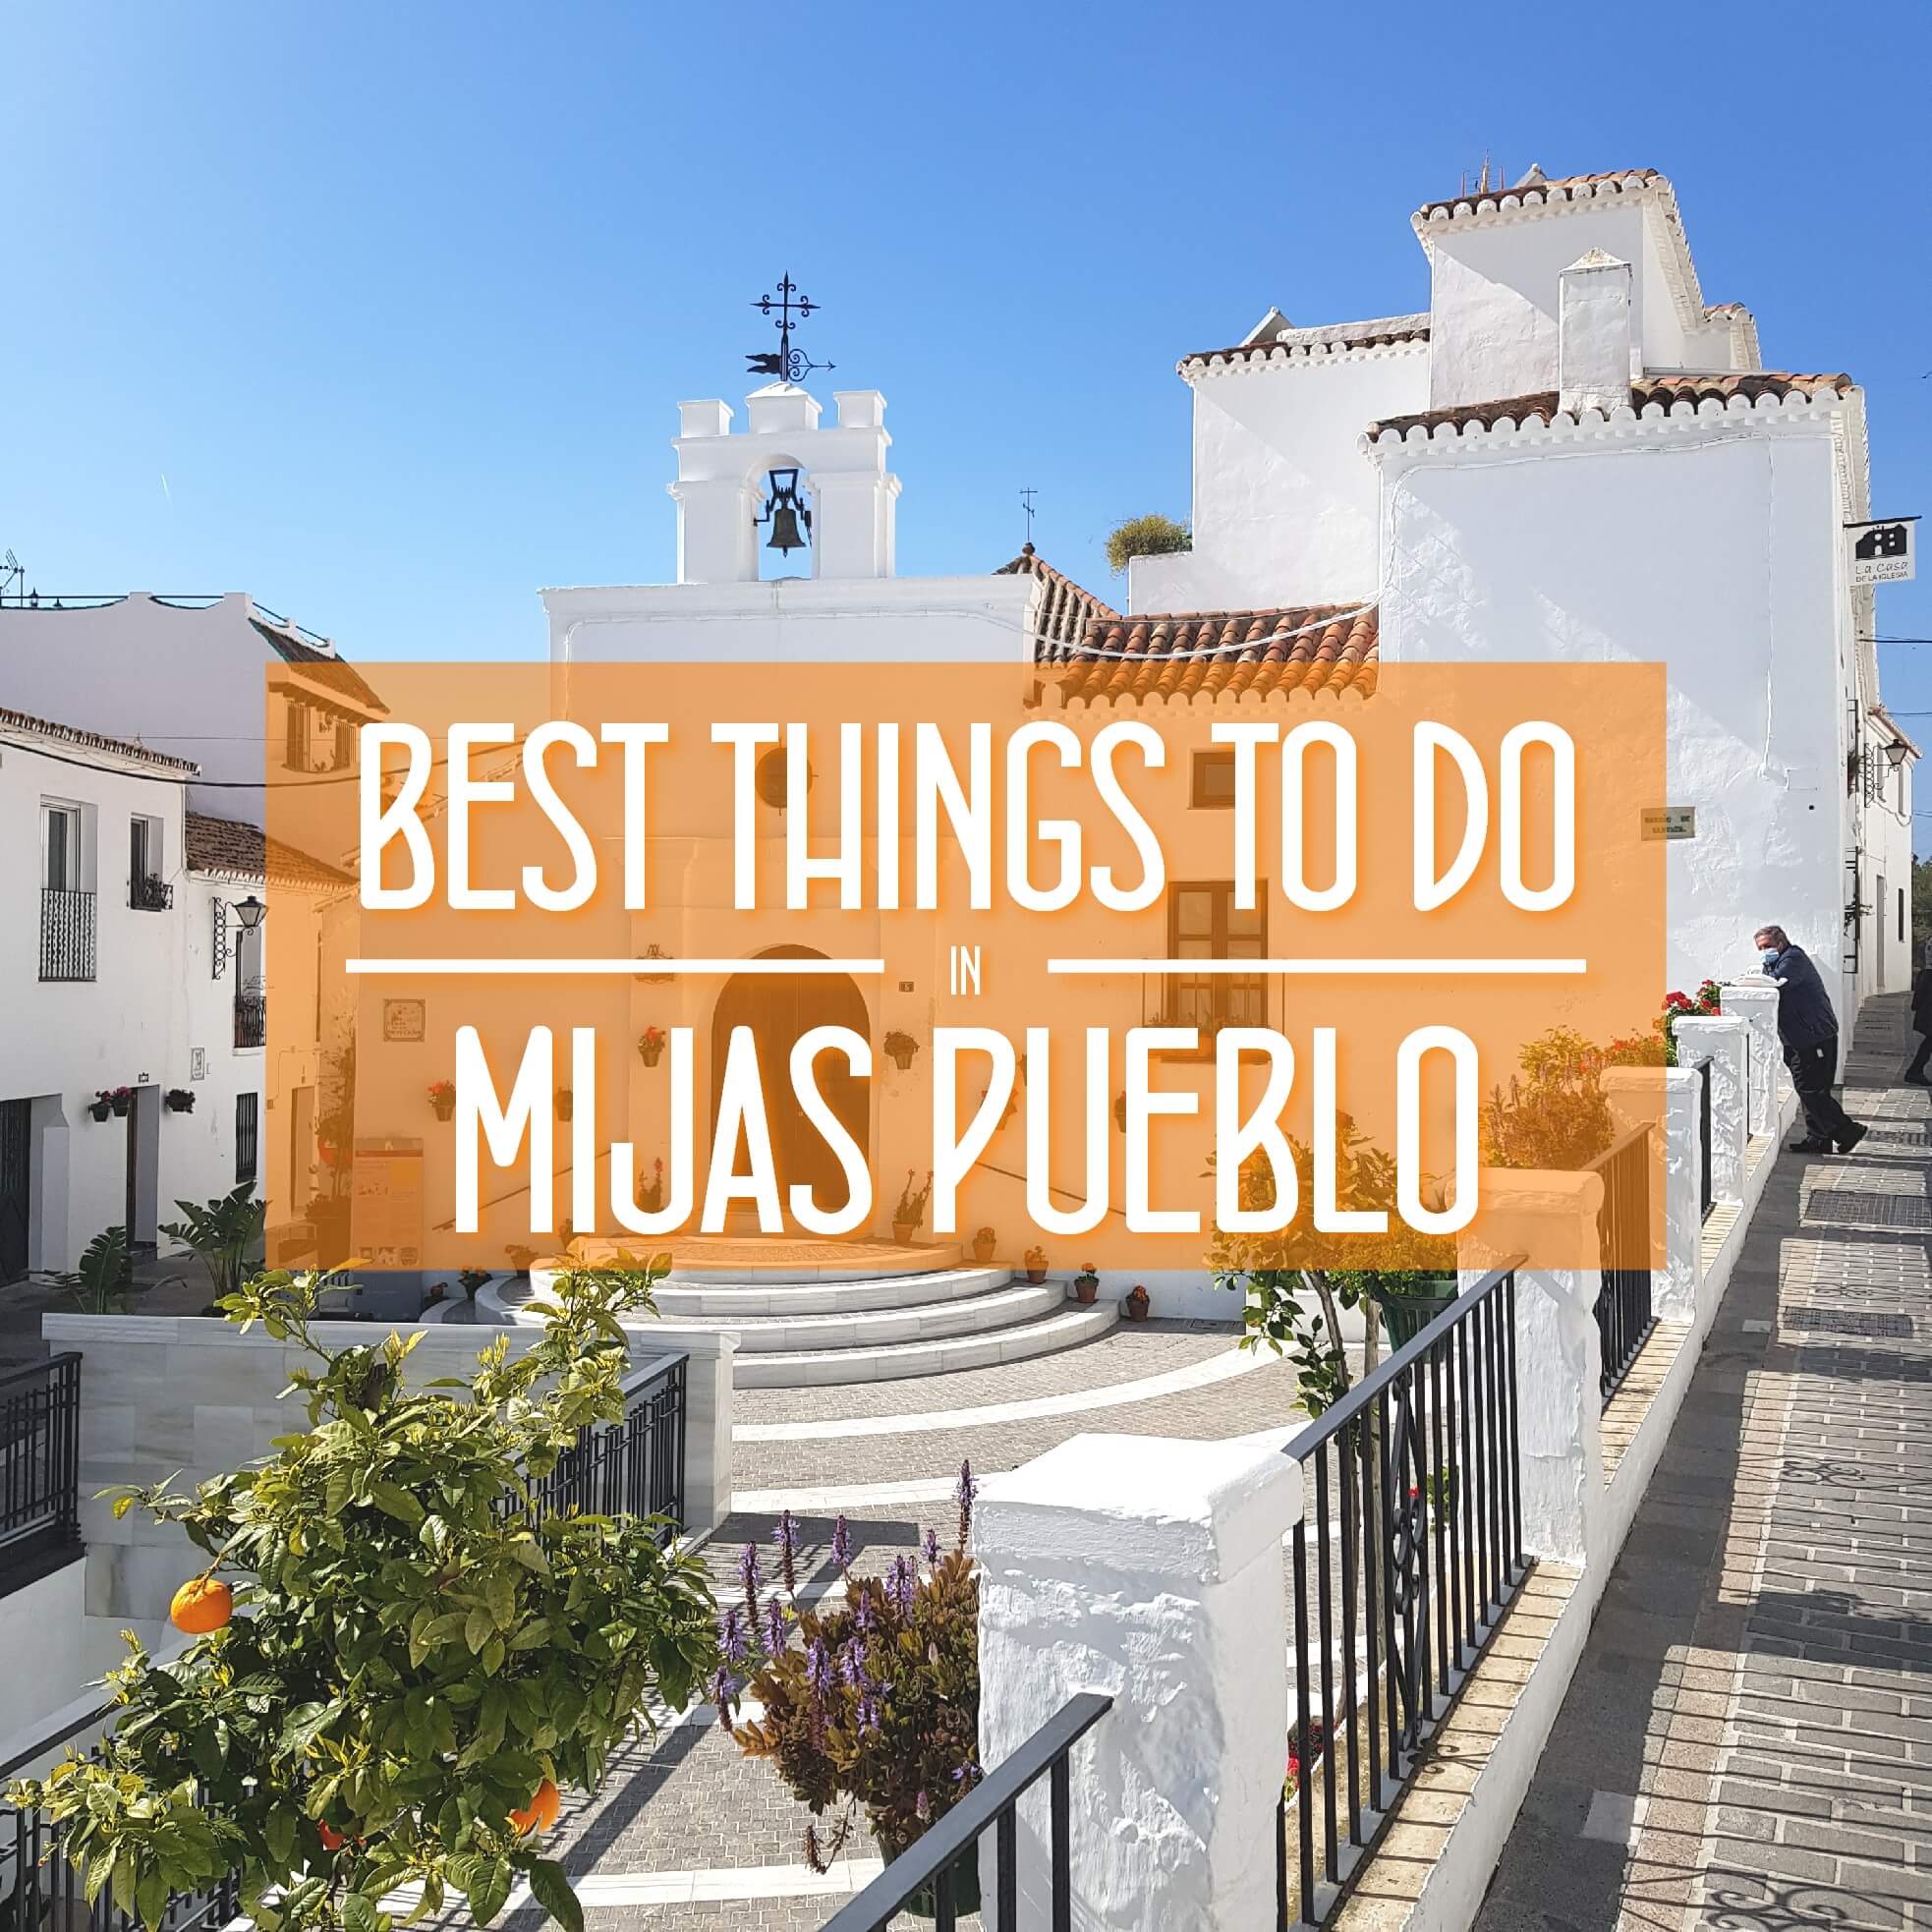 Best things to do in Mijas Pueblo Malaga